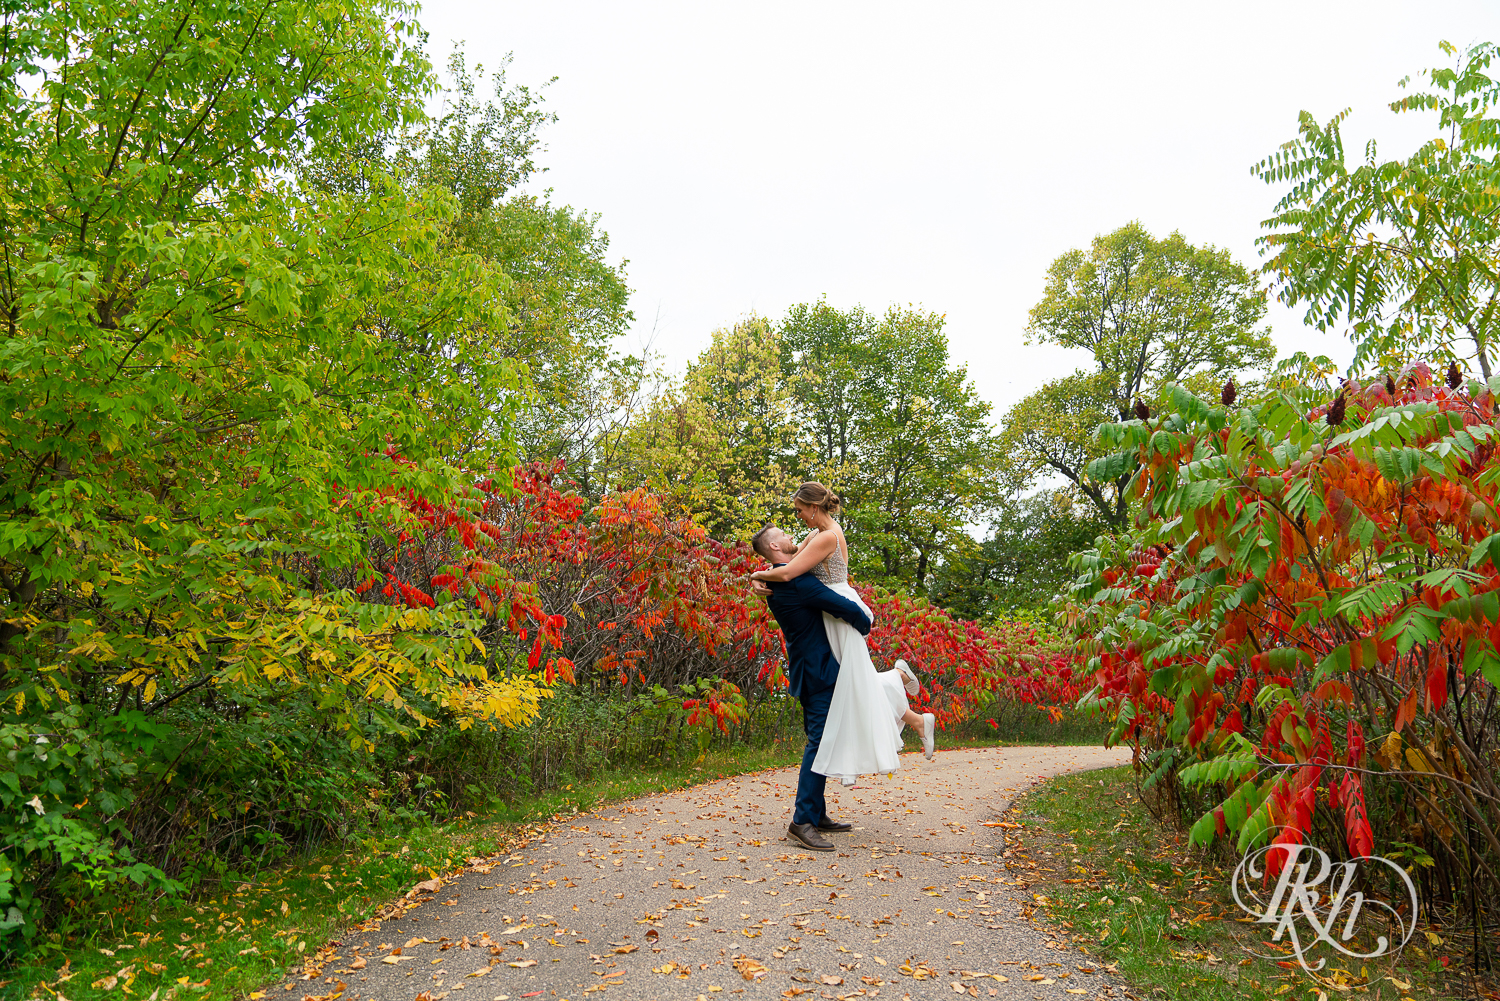 Bride and groom dancing in between red and green leaves at Schaar's Bluff in Hastings, Minnesota. 